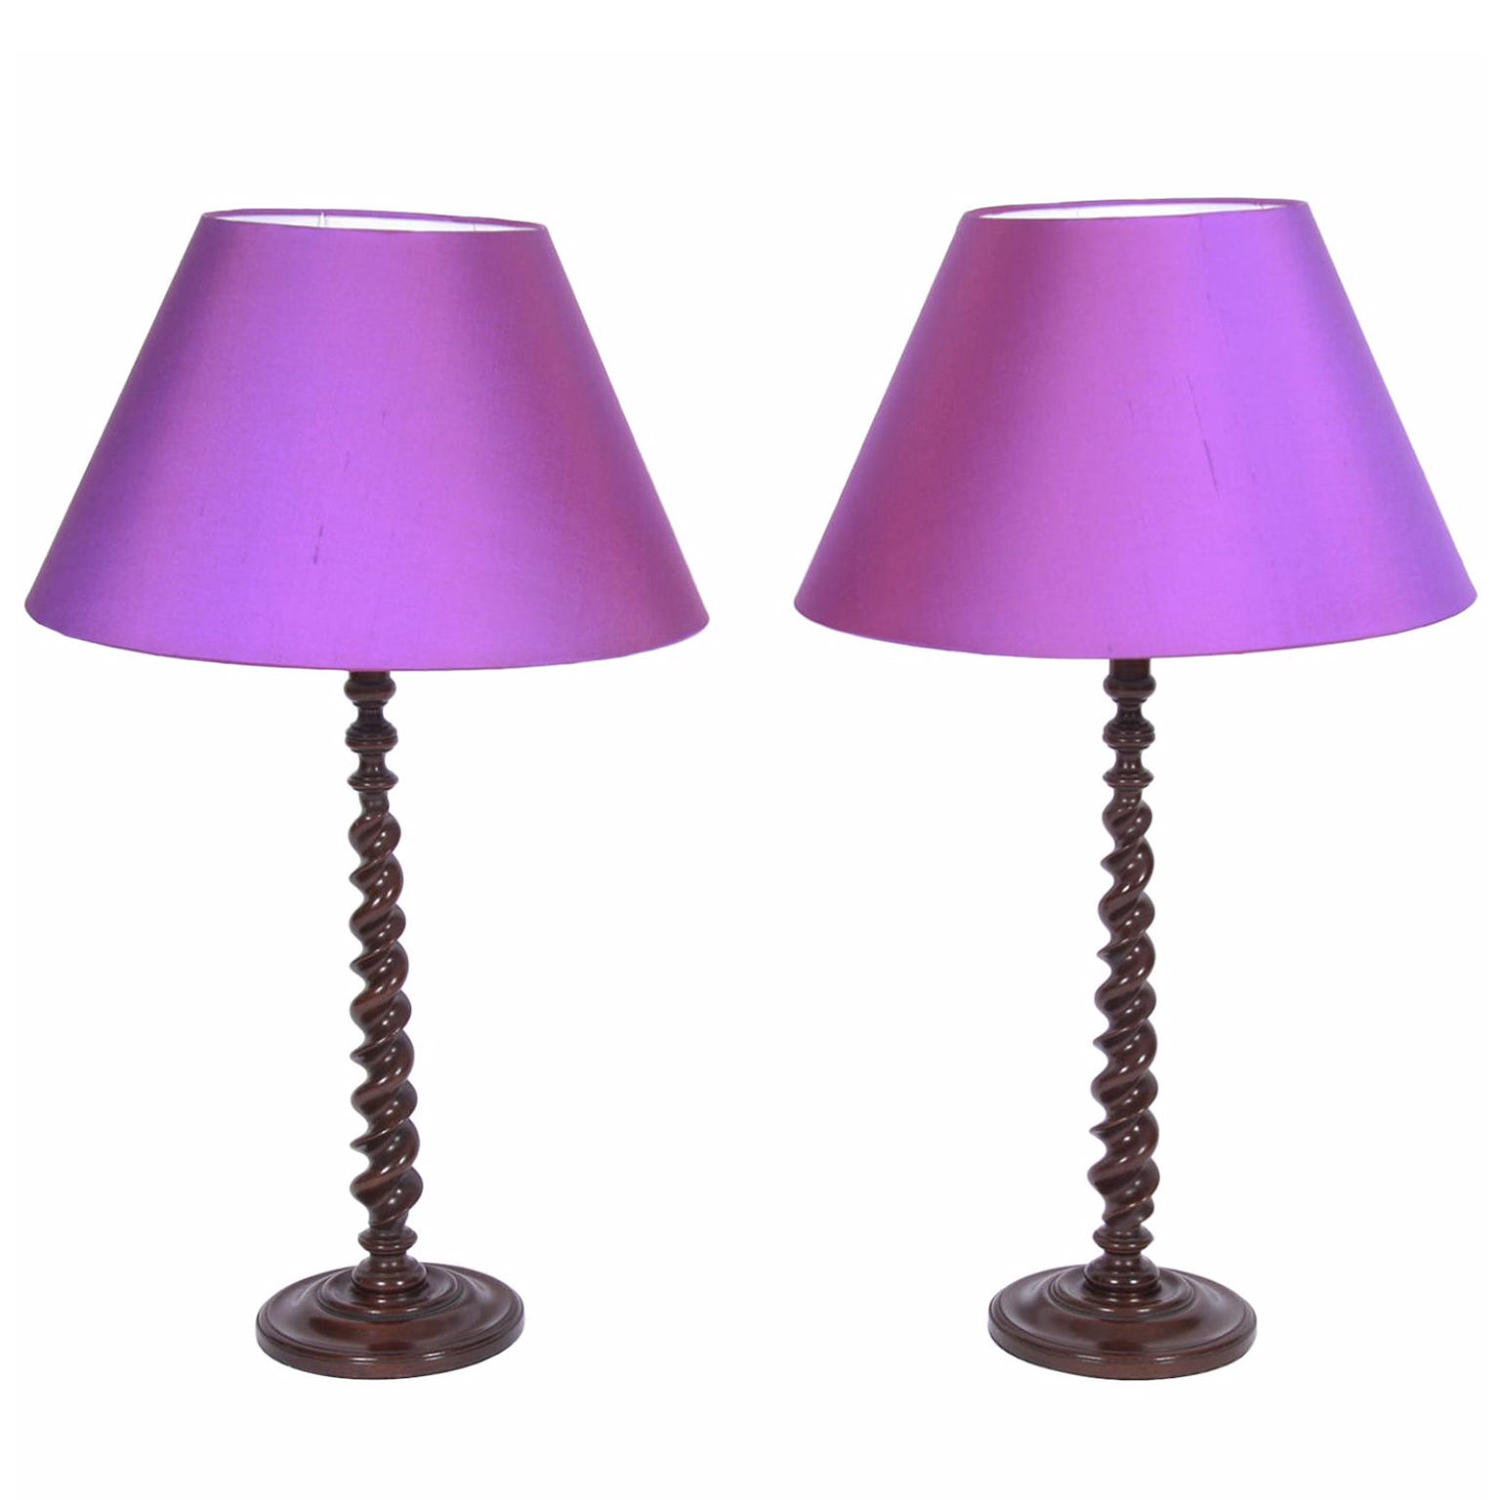 Pair of Barley Twist Table Lamps